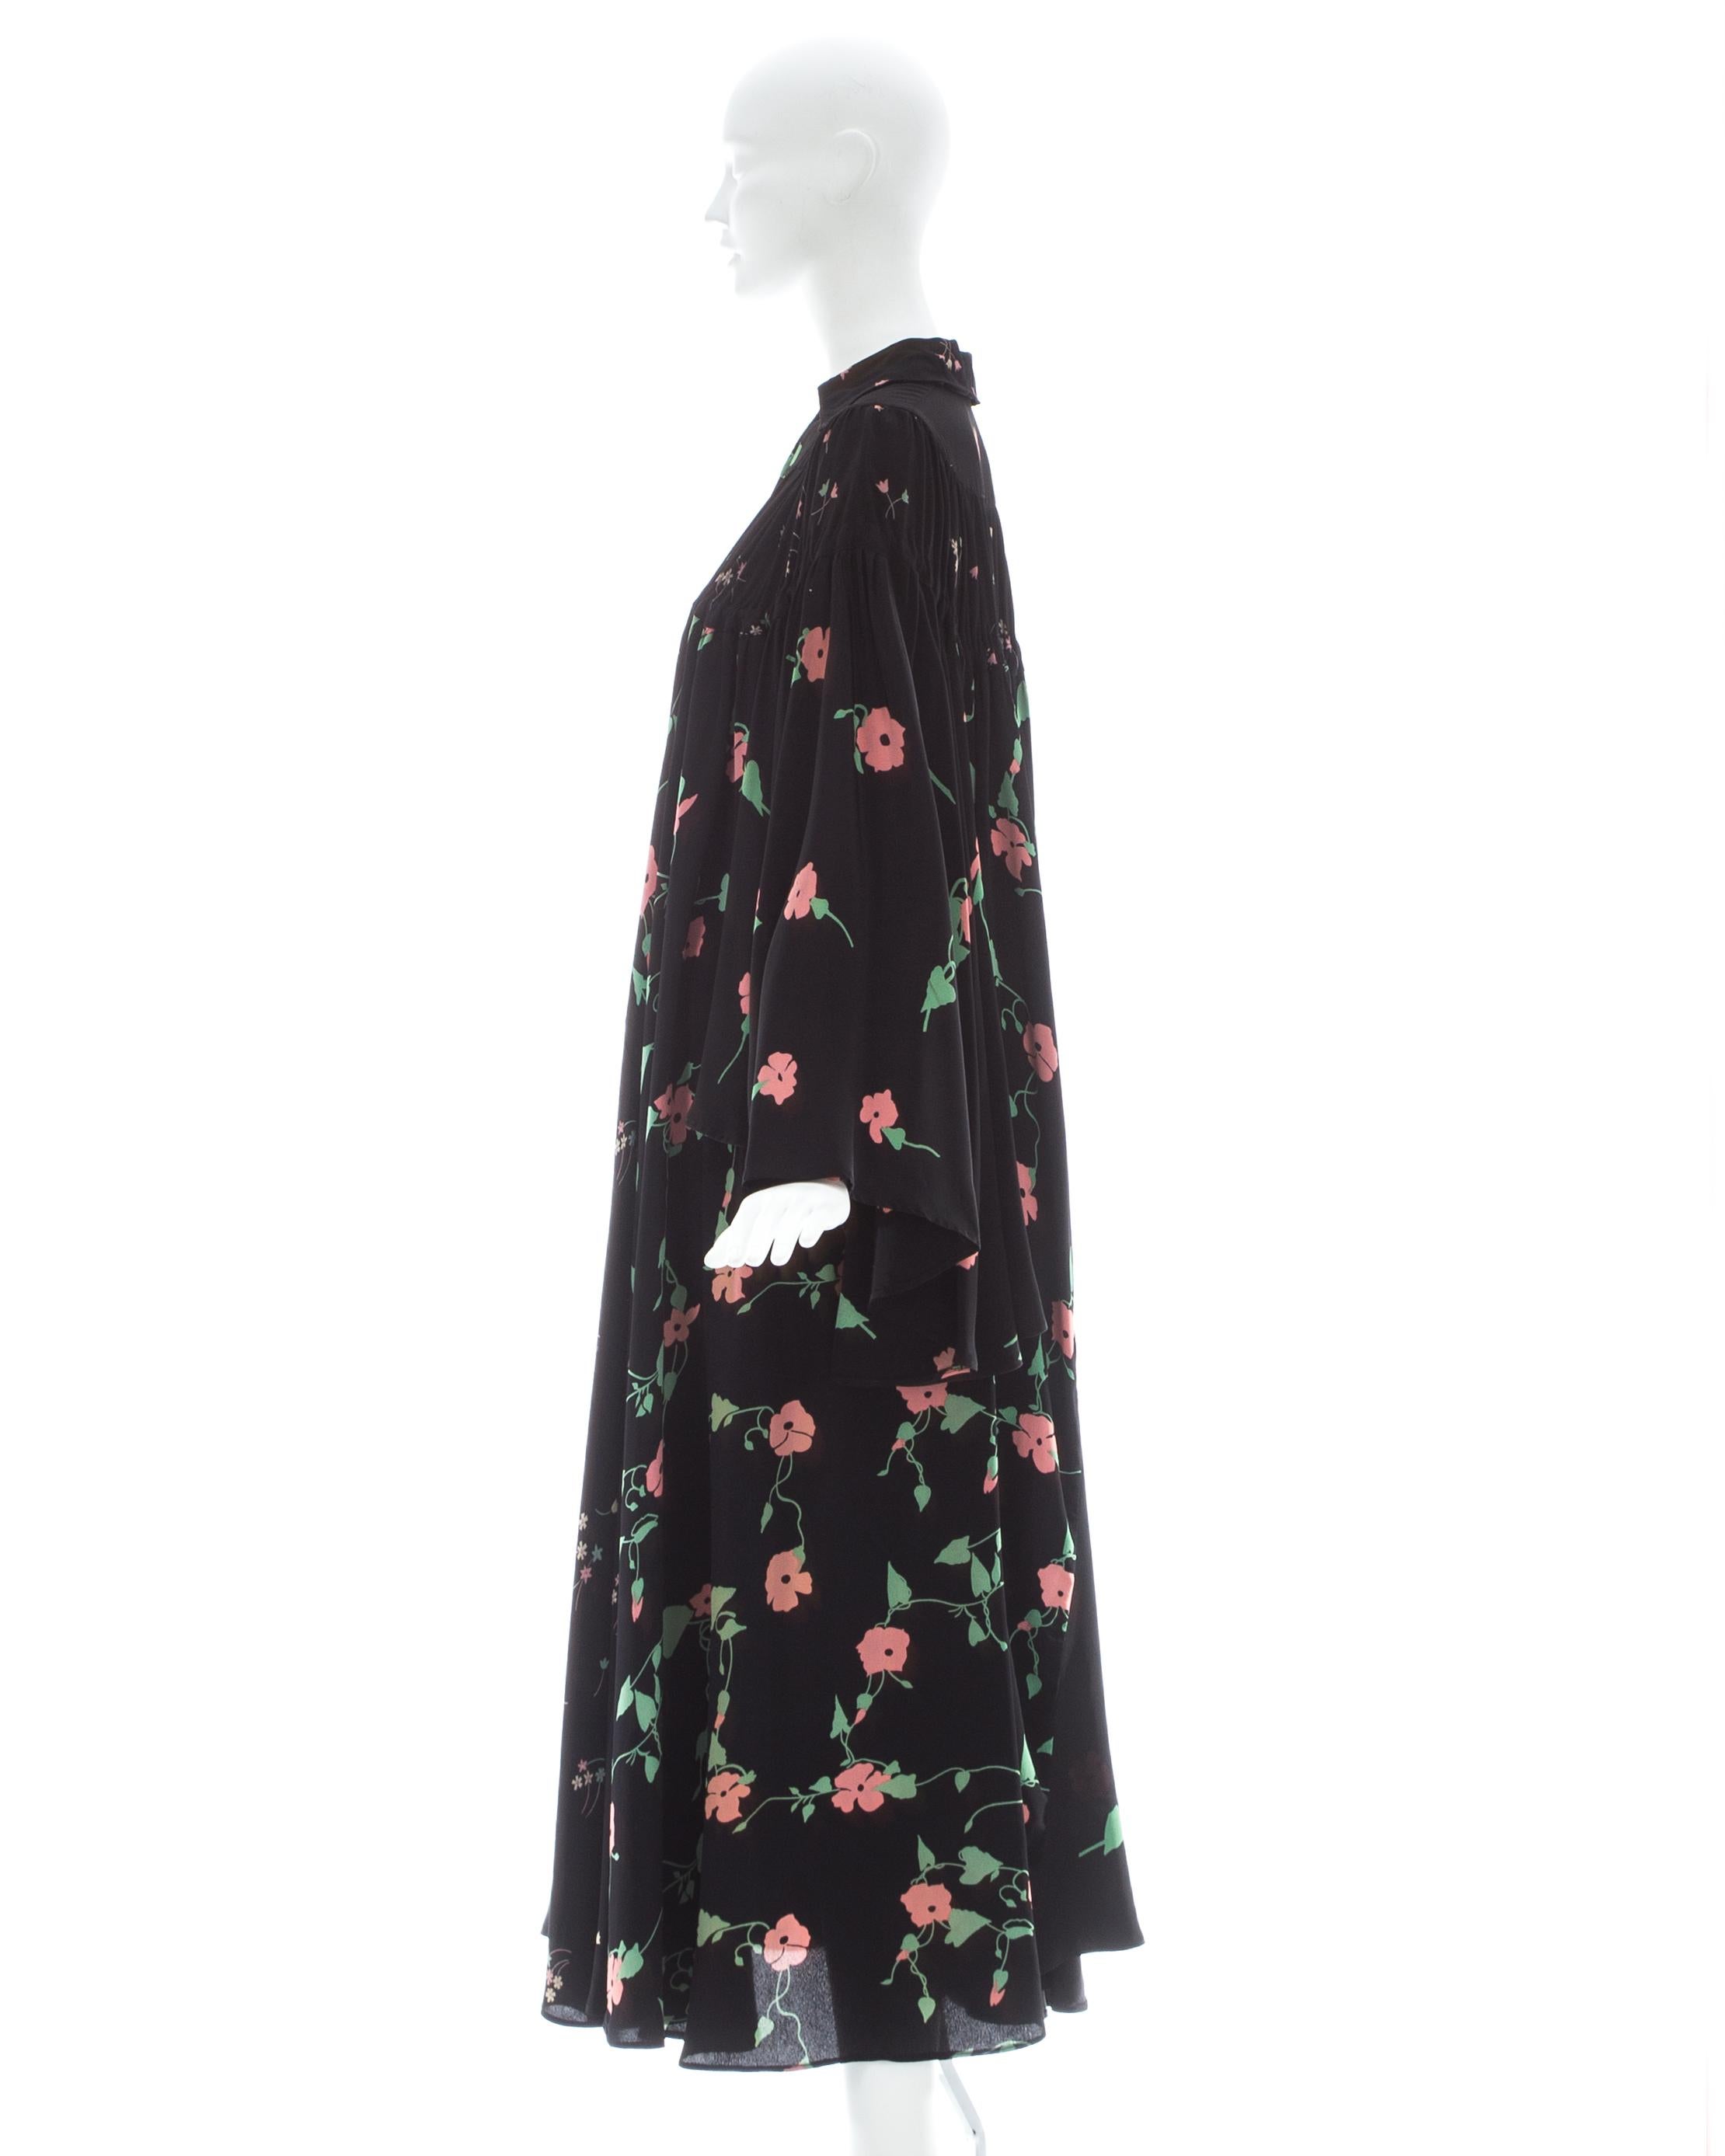 Women's Ossie Clark black silk floral printed bell sleeve dress, ca. 1971 For Sale